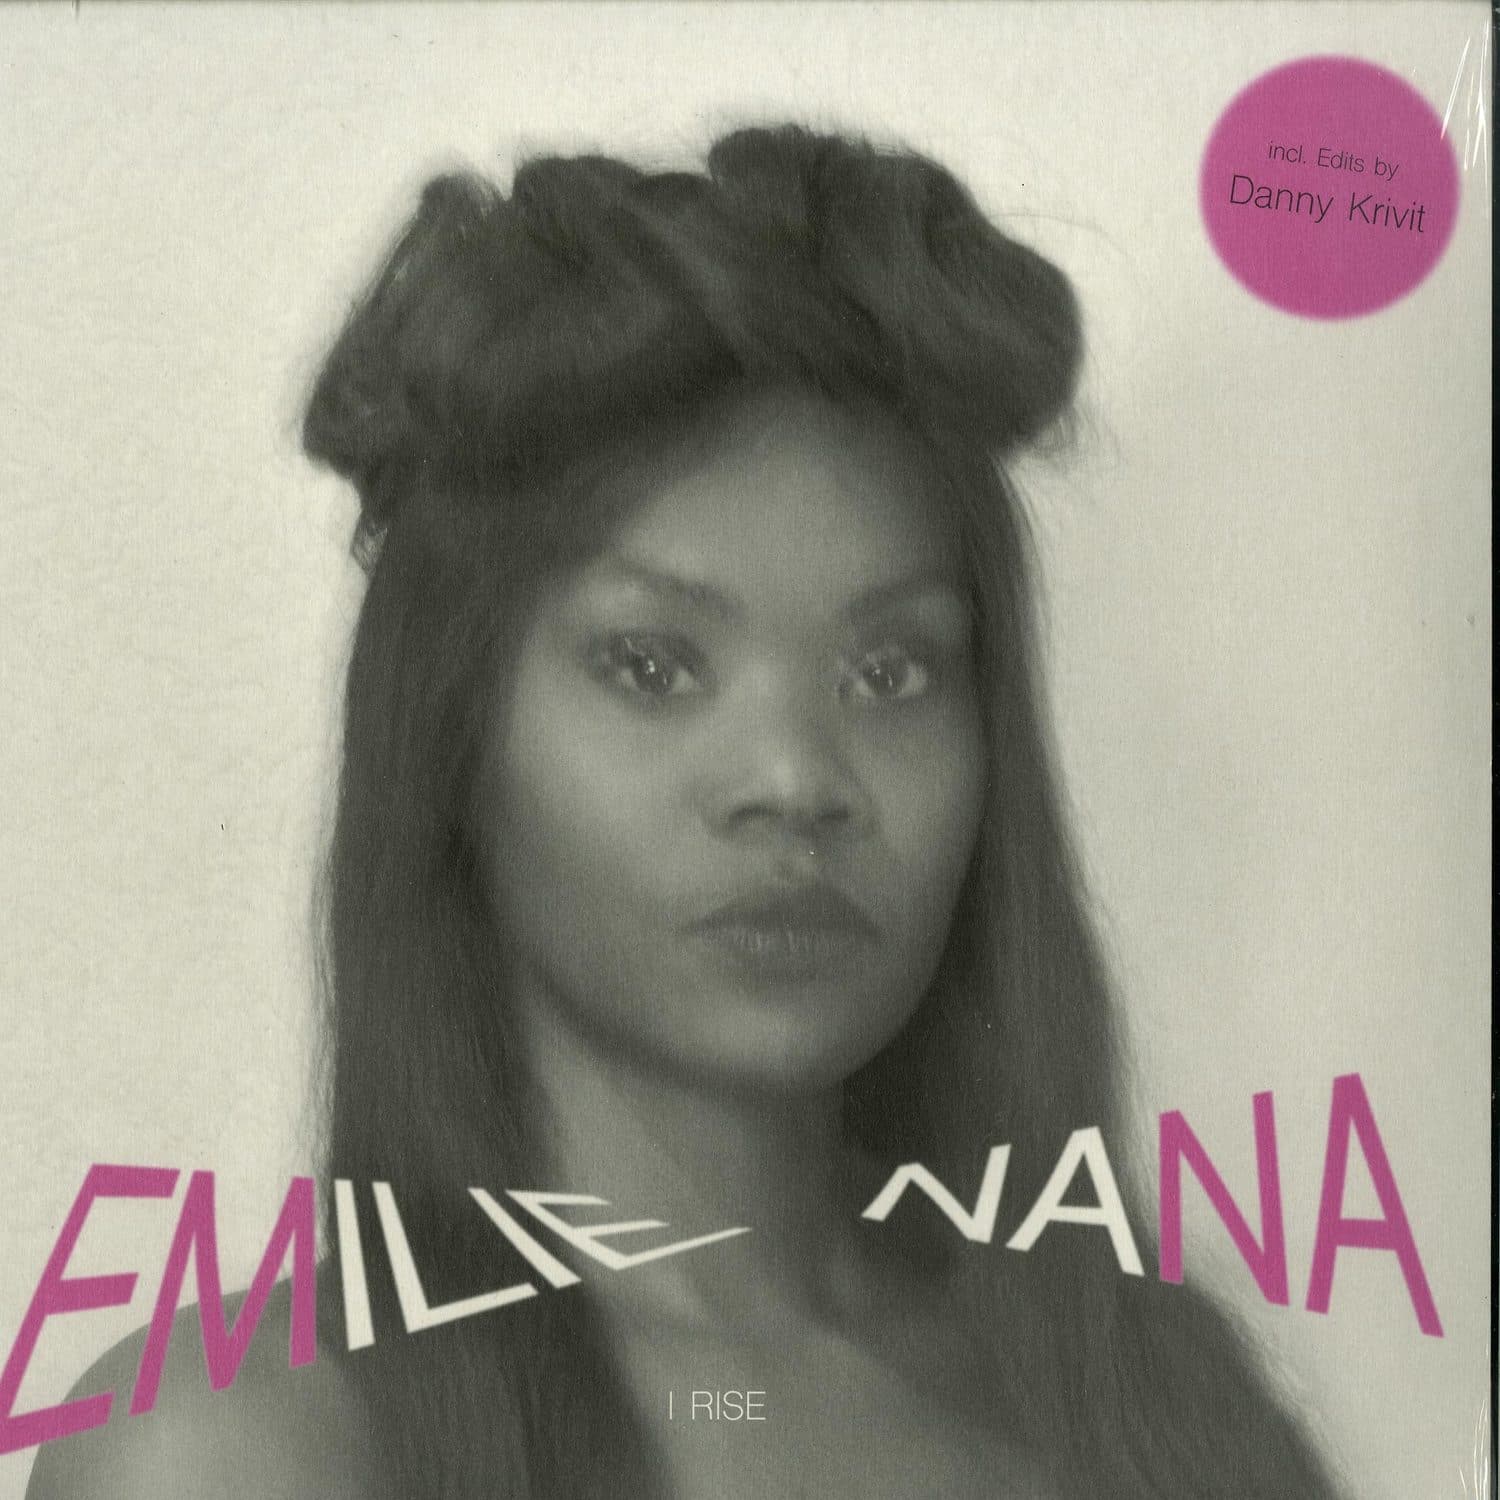 Emilie Nana - I RISE EP 